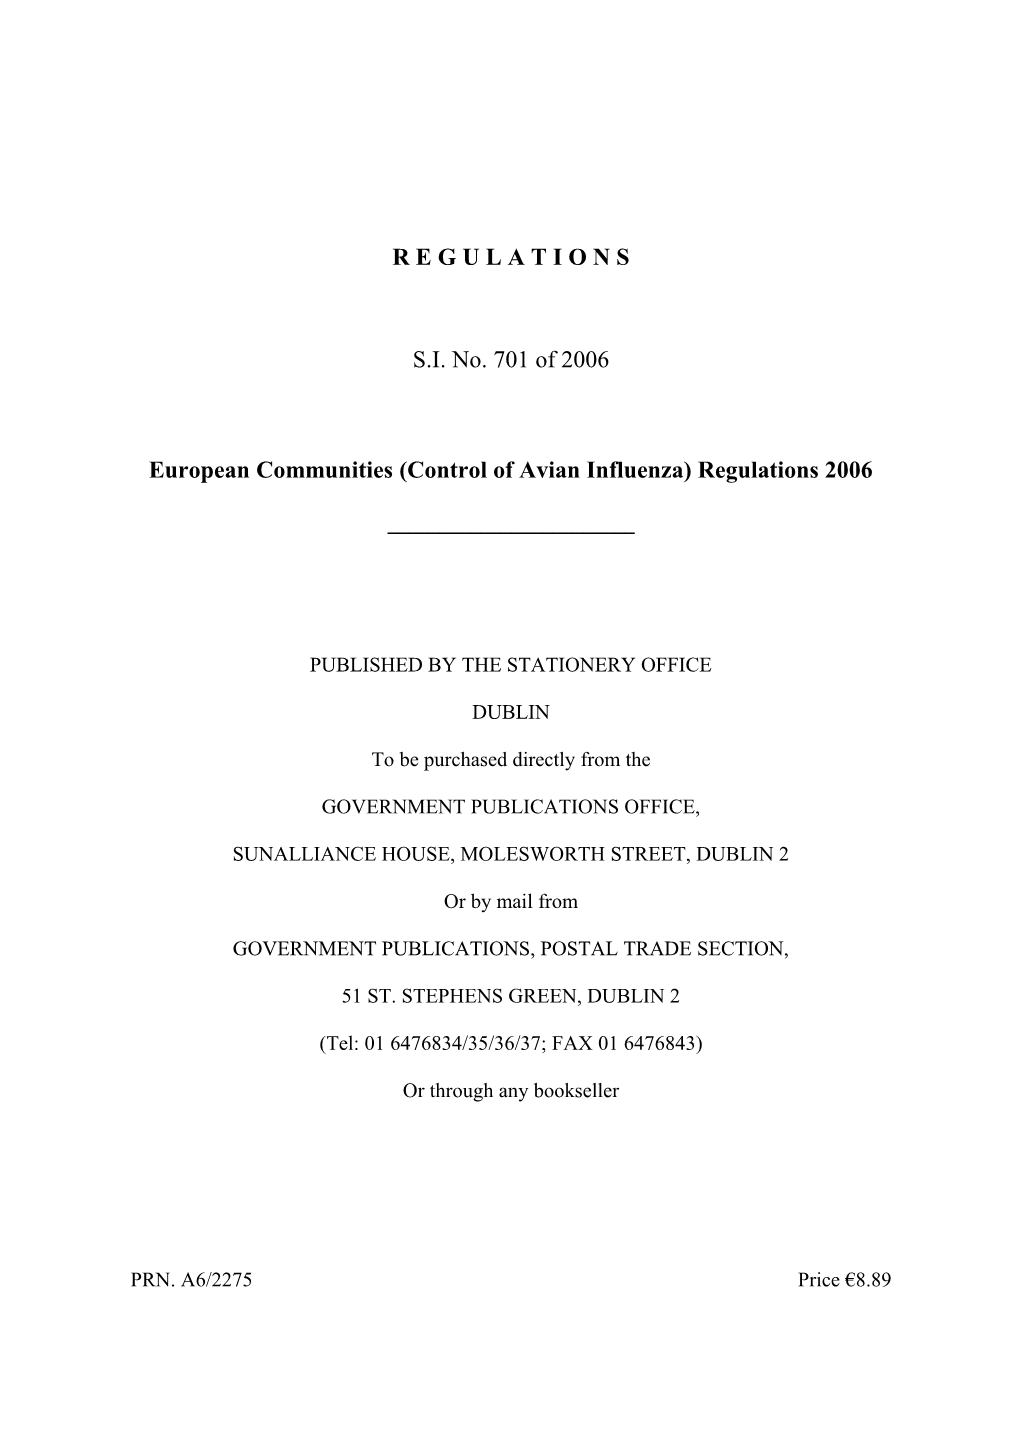 European Communities (Control of Avian Influenza) Regulations 2006